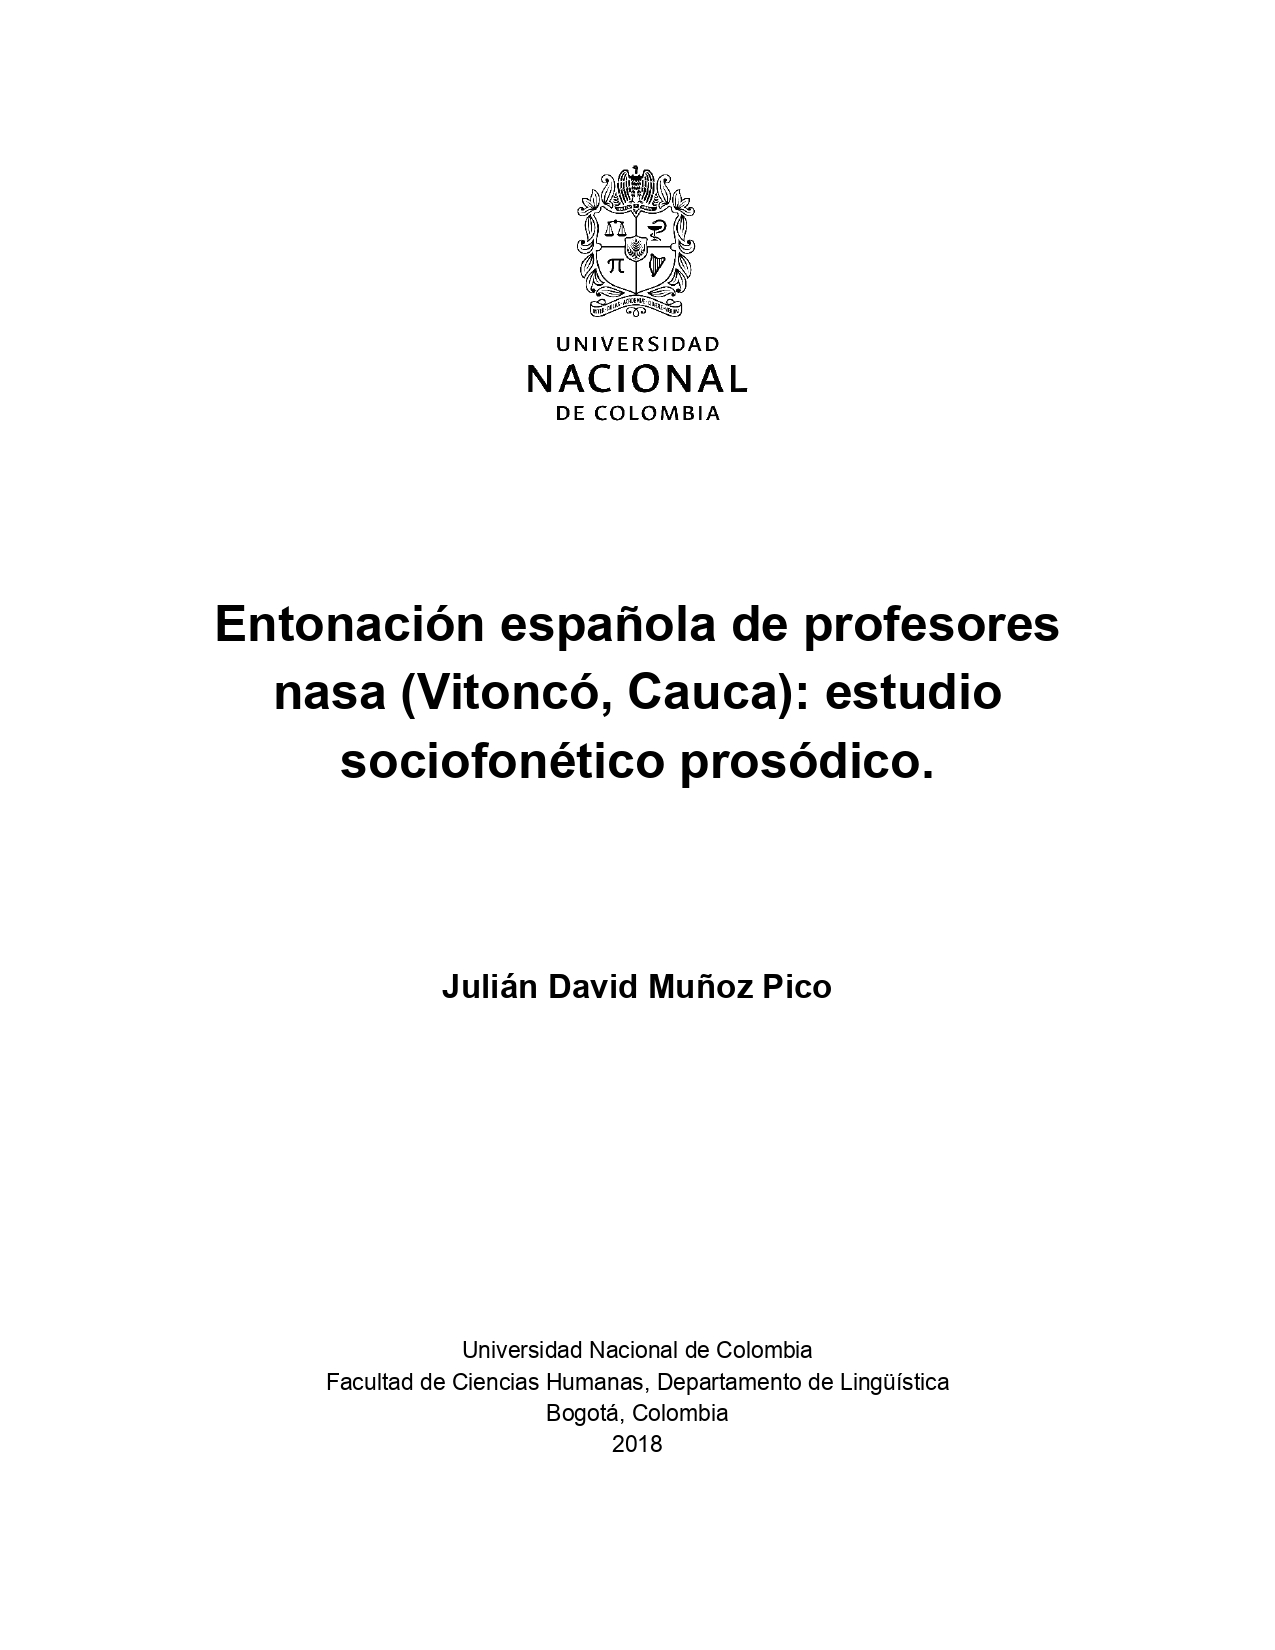 Entonación española de profesores nasa (Vitoncó, Cauca): estudio sociofonético prosódico.